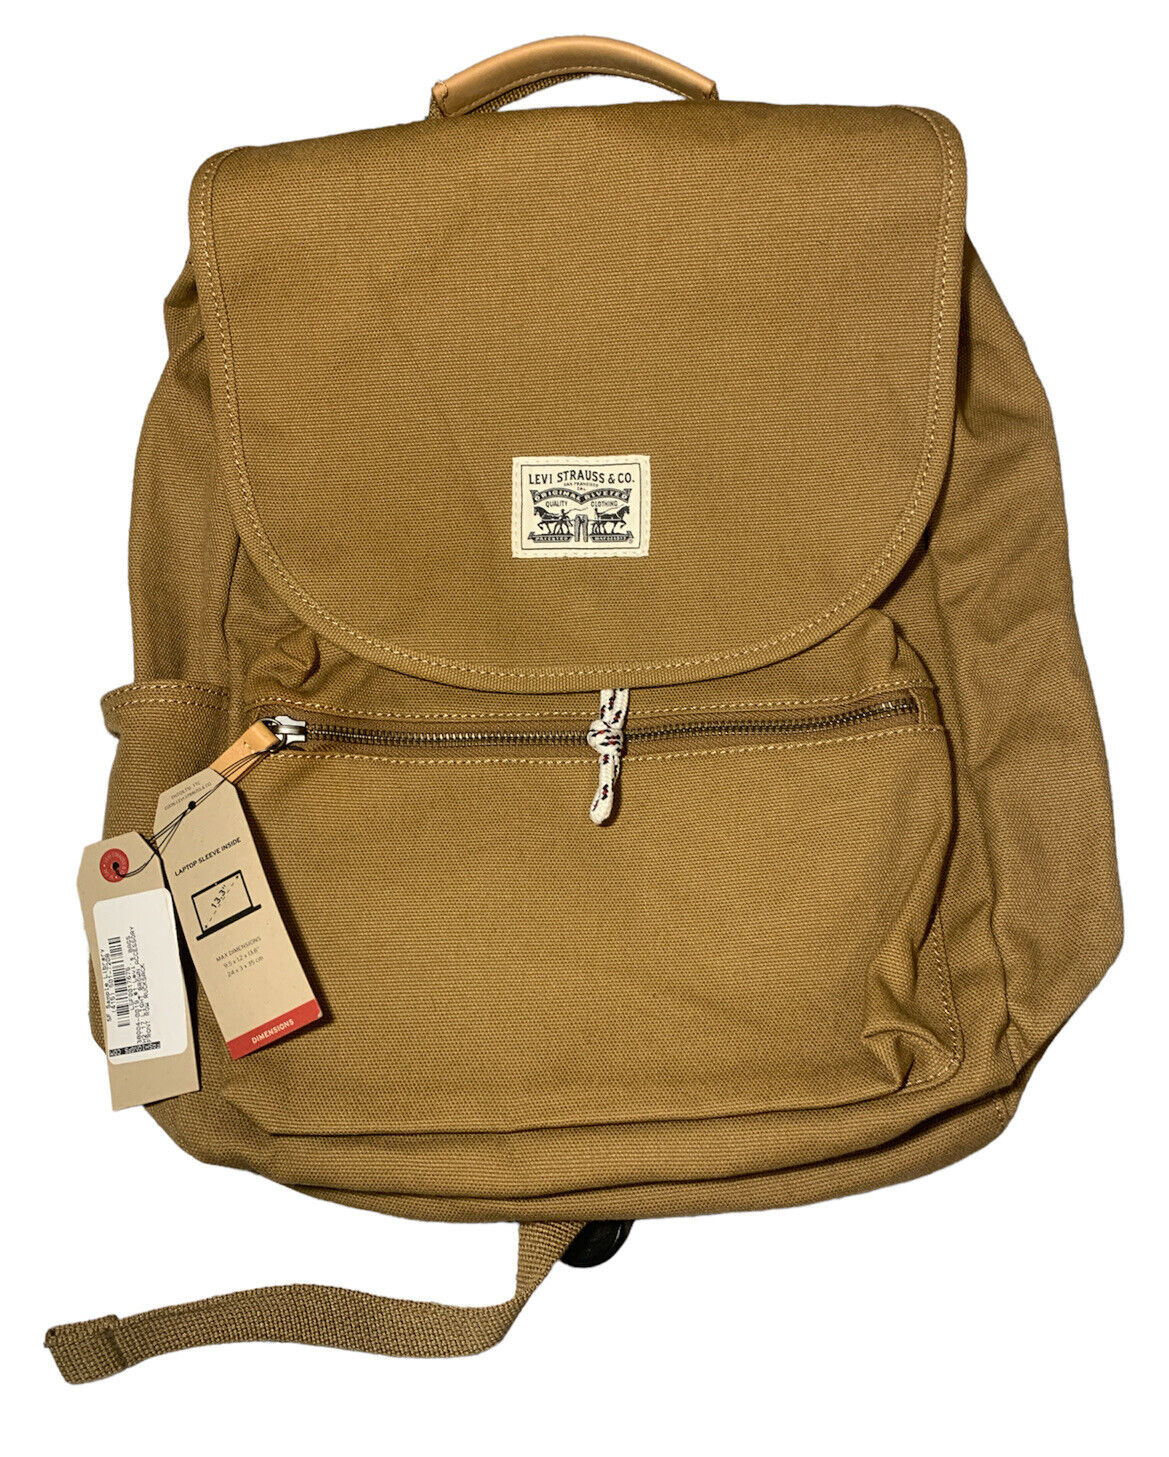 Levi’s Canvas Backpack Laptop Sleeve Unisex Light Brown SAMPLE Prototype NWT